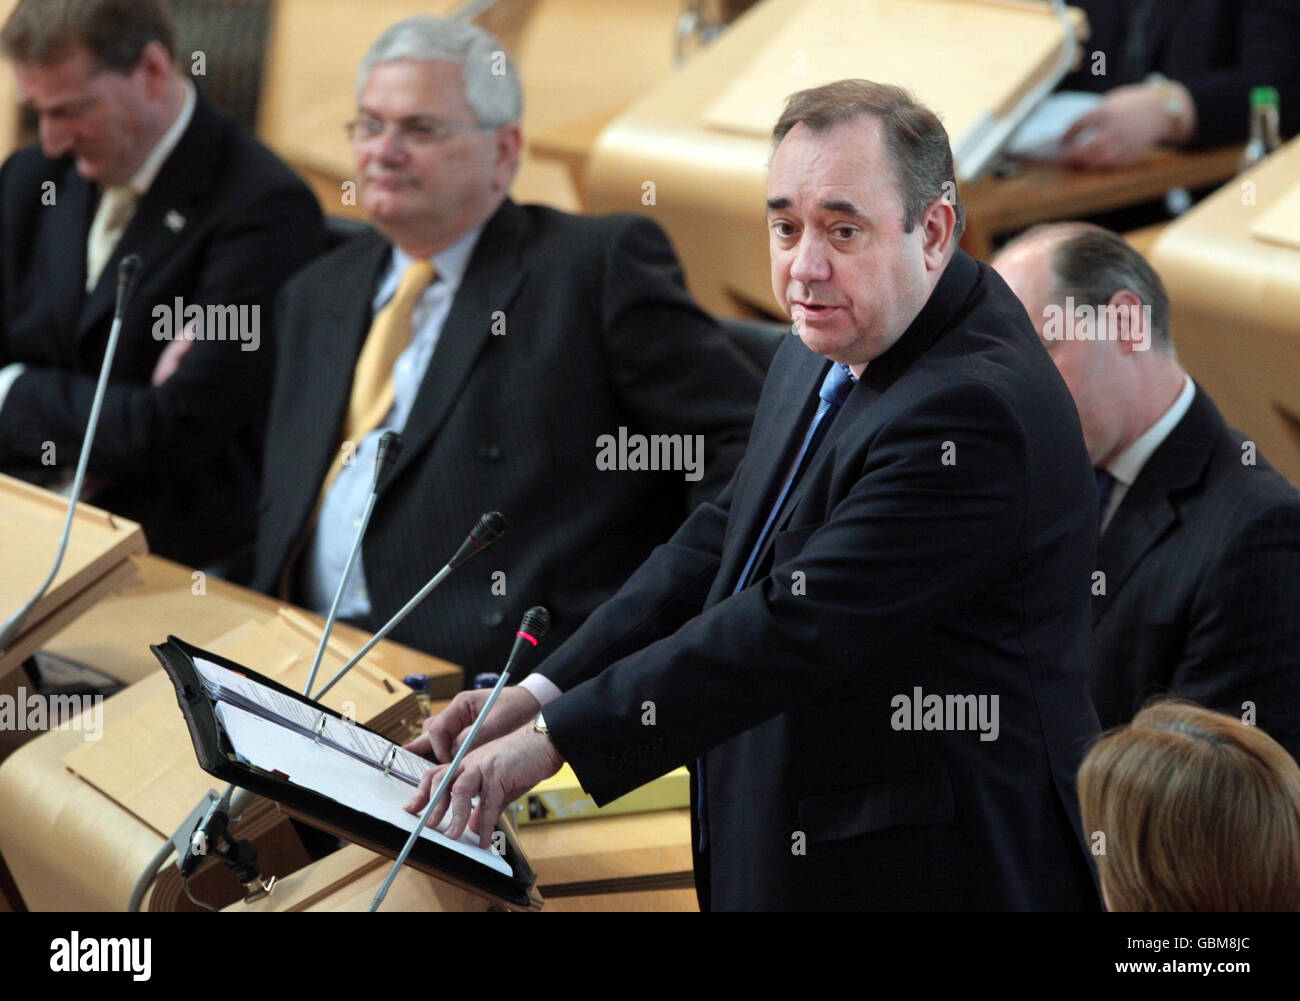 Scottish First Minister Alex Salmond (right) during First Ministers Questions at the Scottish parliament in Edinburgh. Stock Photo